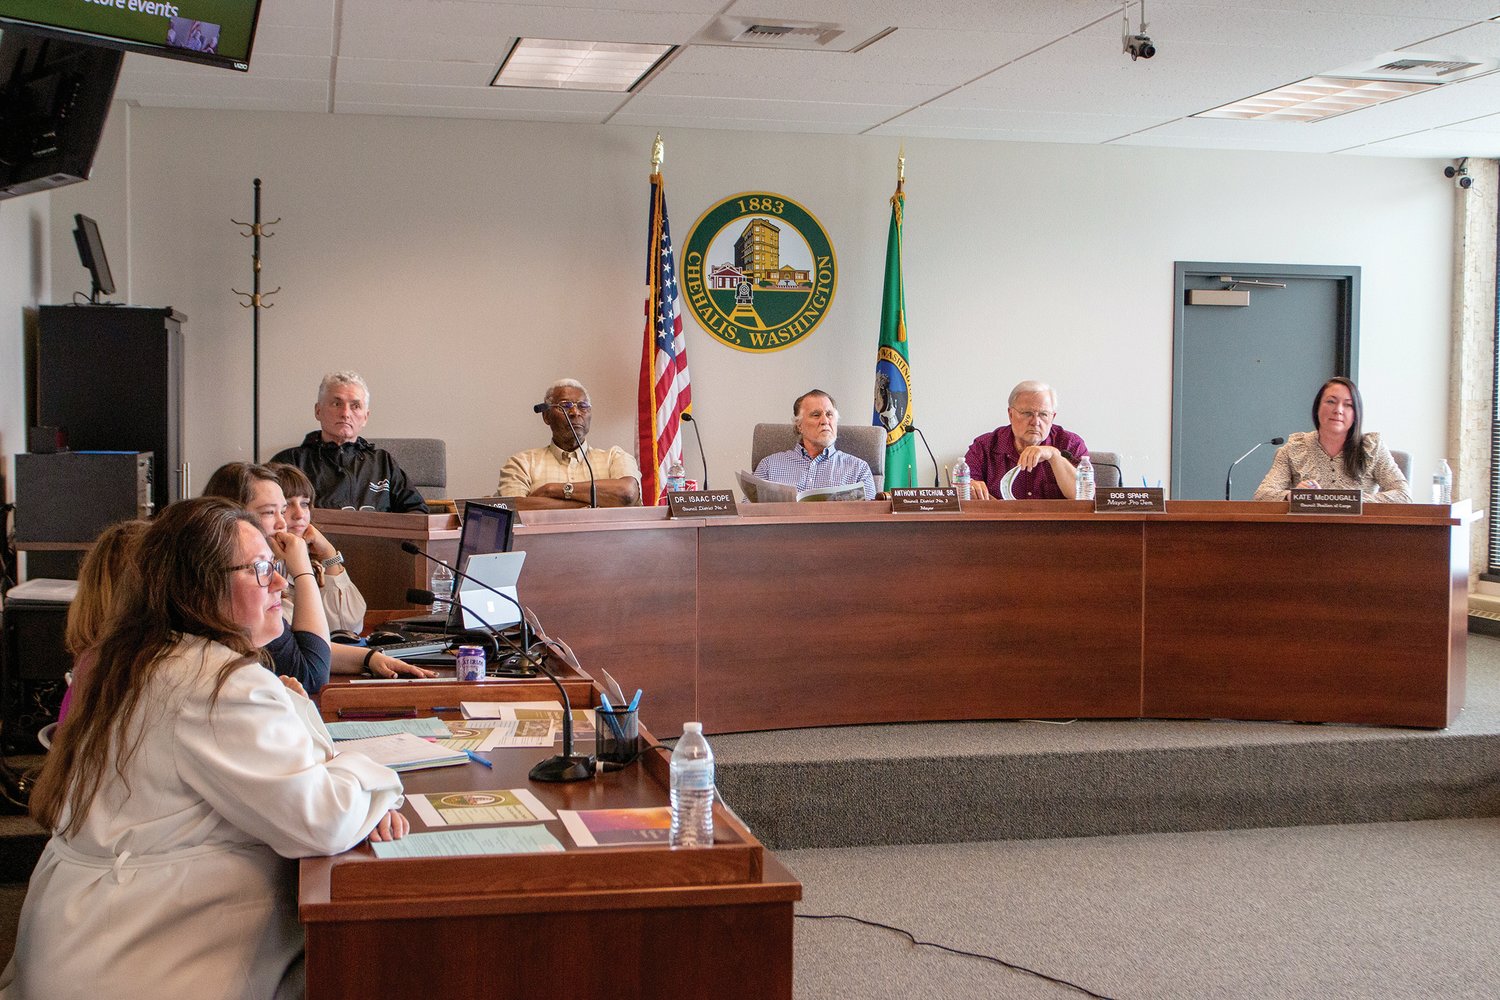 The Chehalis City Council listens to a presentation at the May 22 meeting held at Chehalis City Hall.